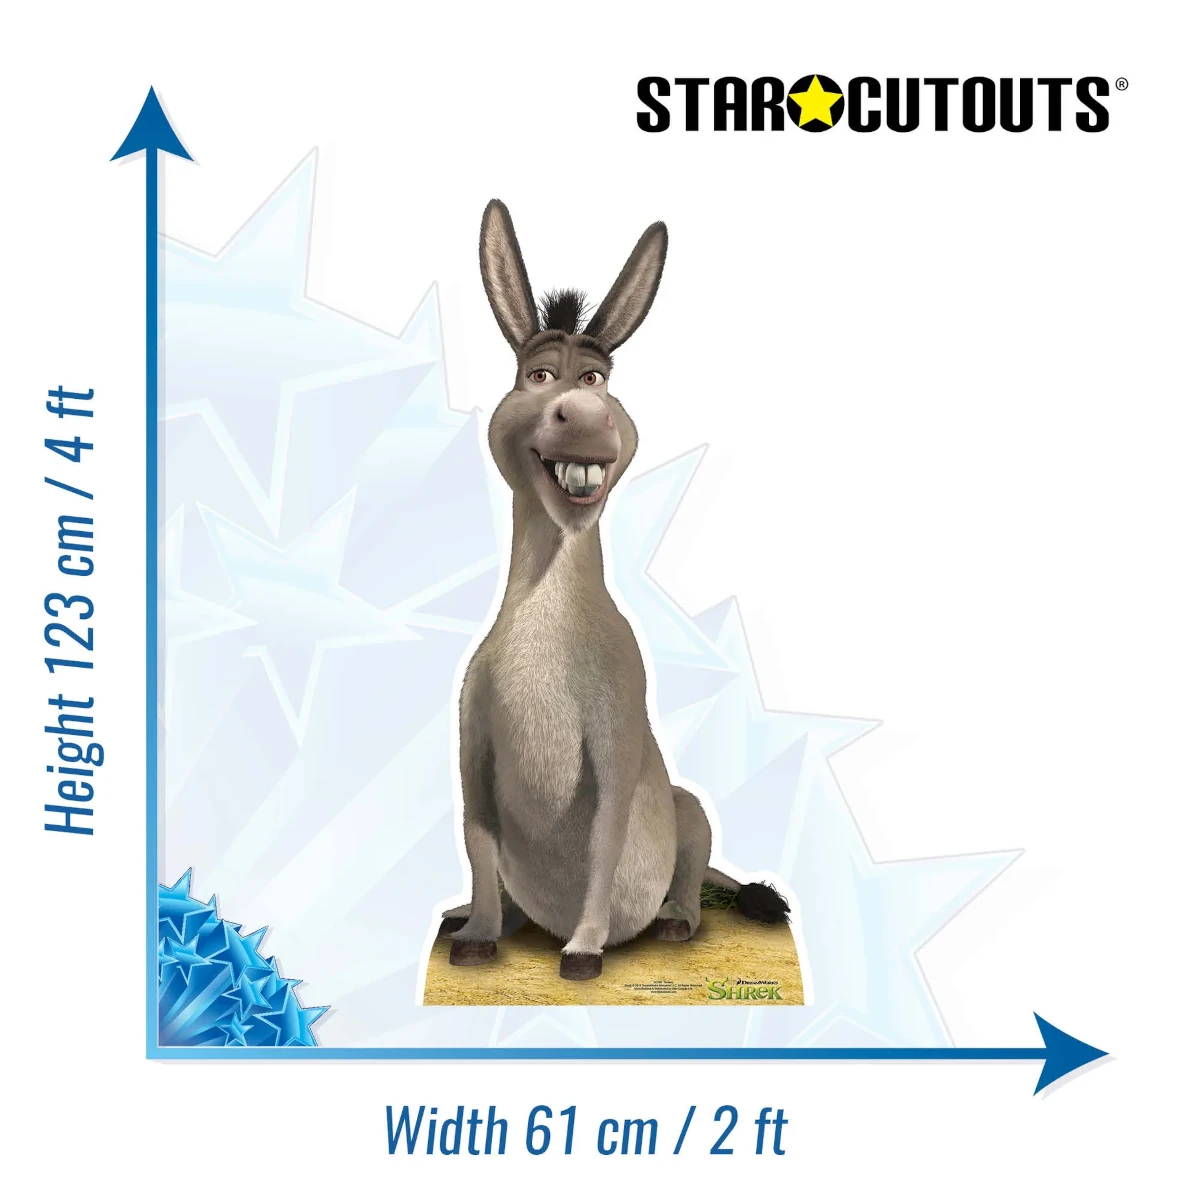 SC788 Donkey (DreamWorks Animation Shrek) Official Lifesize Cardboard Cutout Standee Size